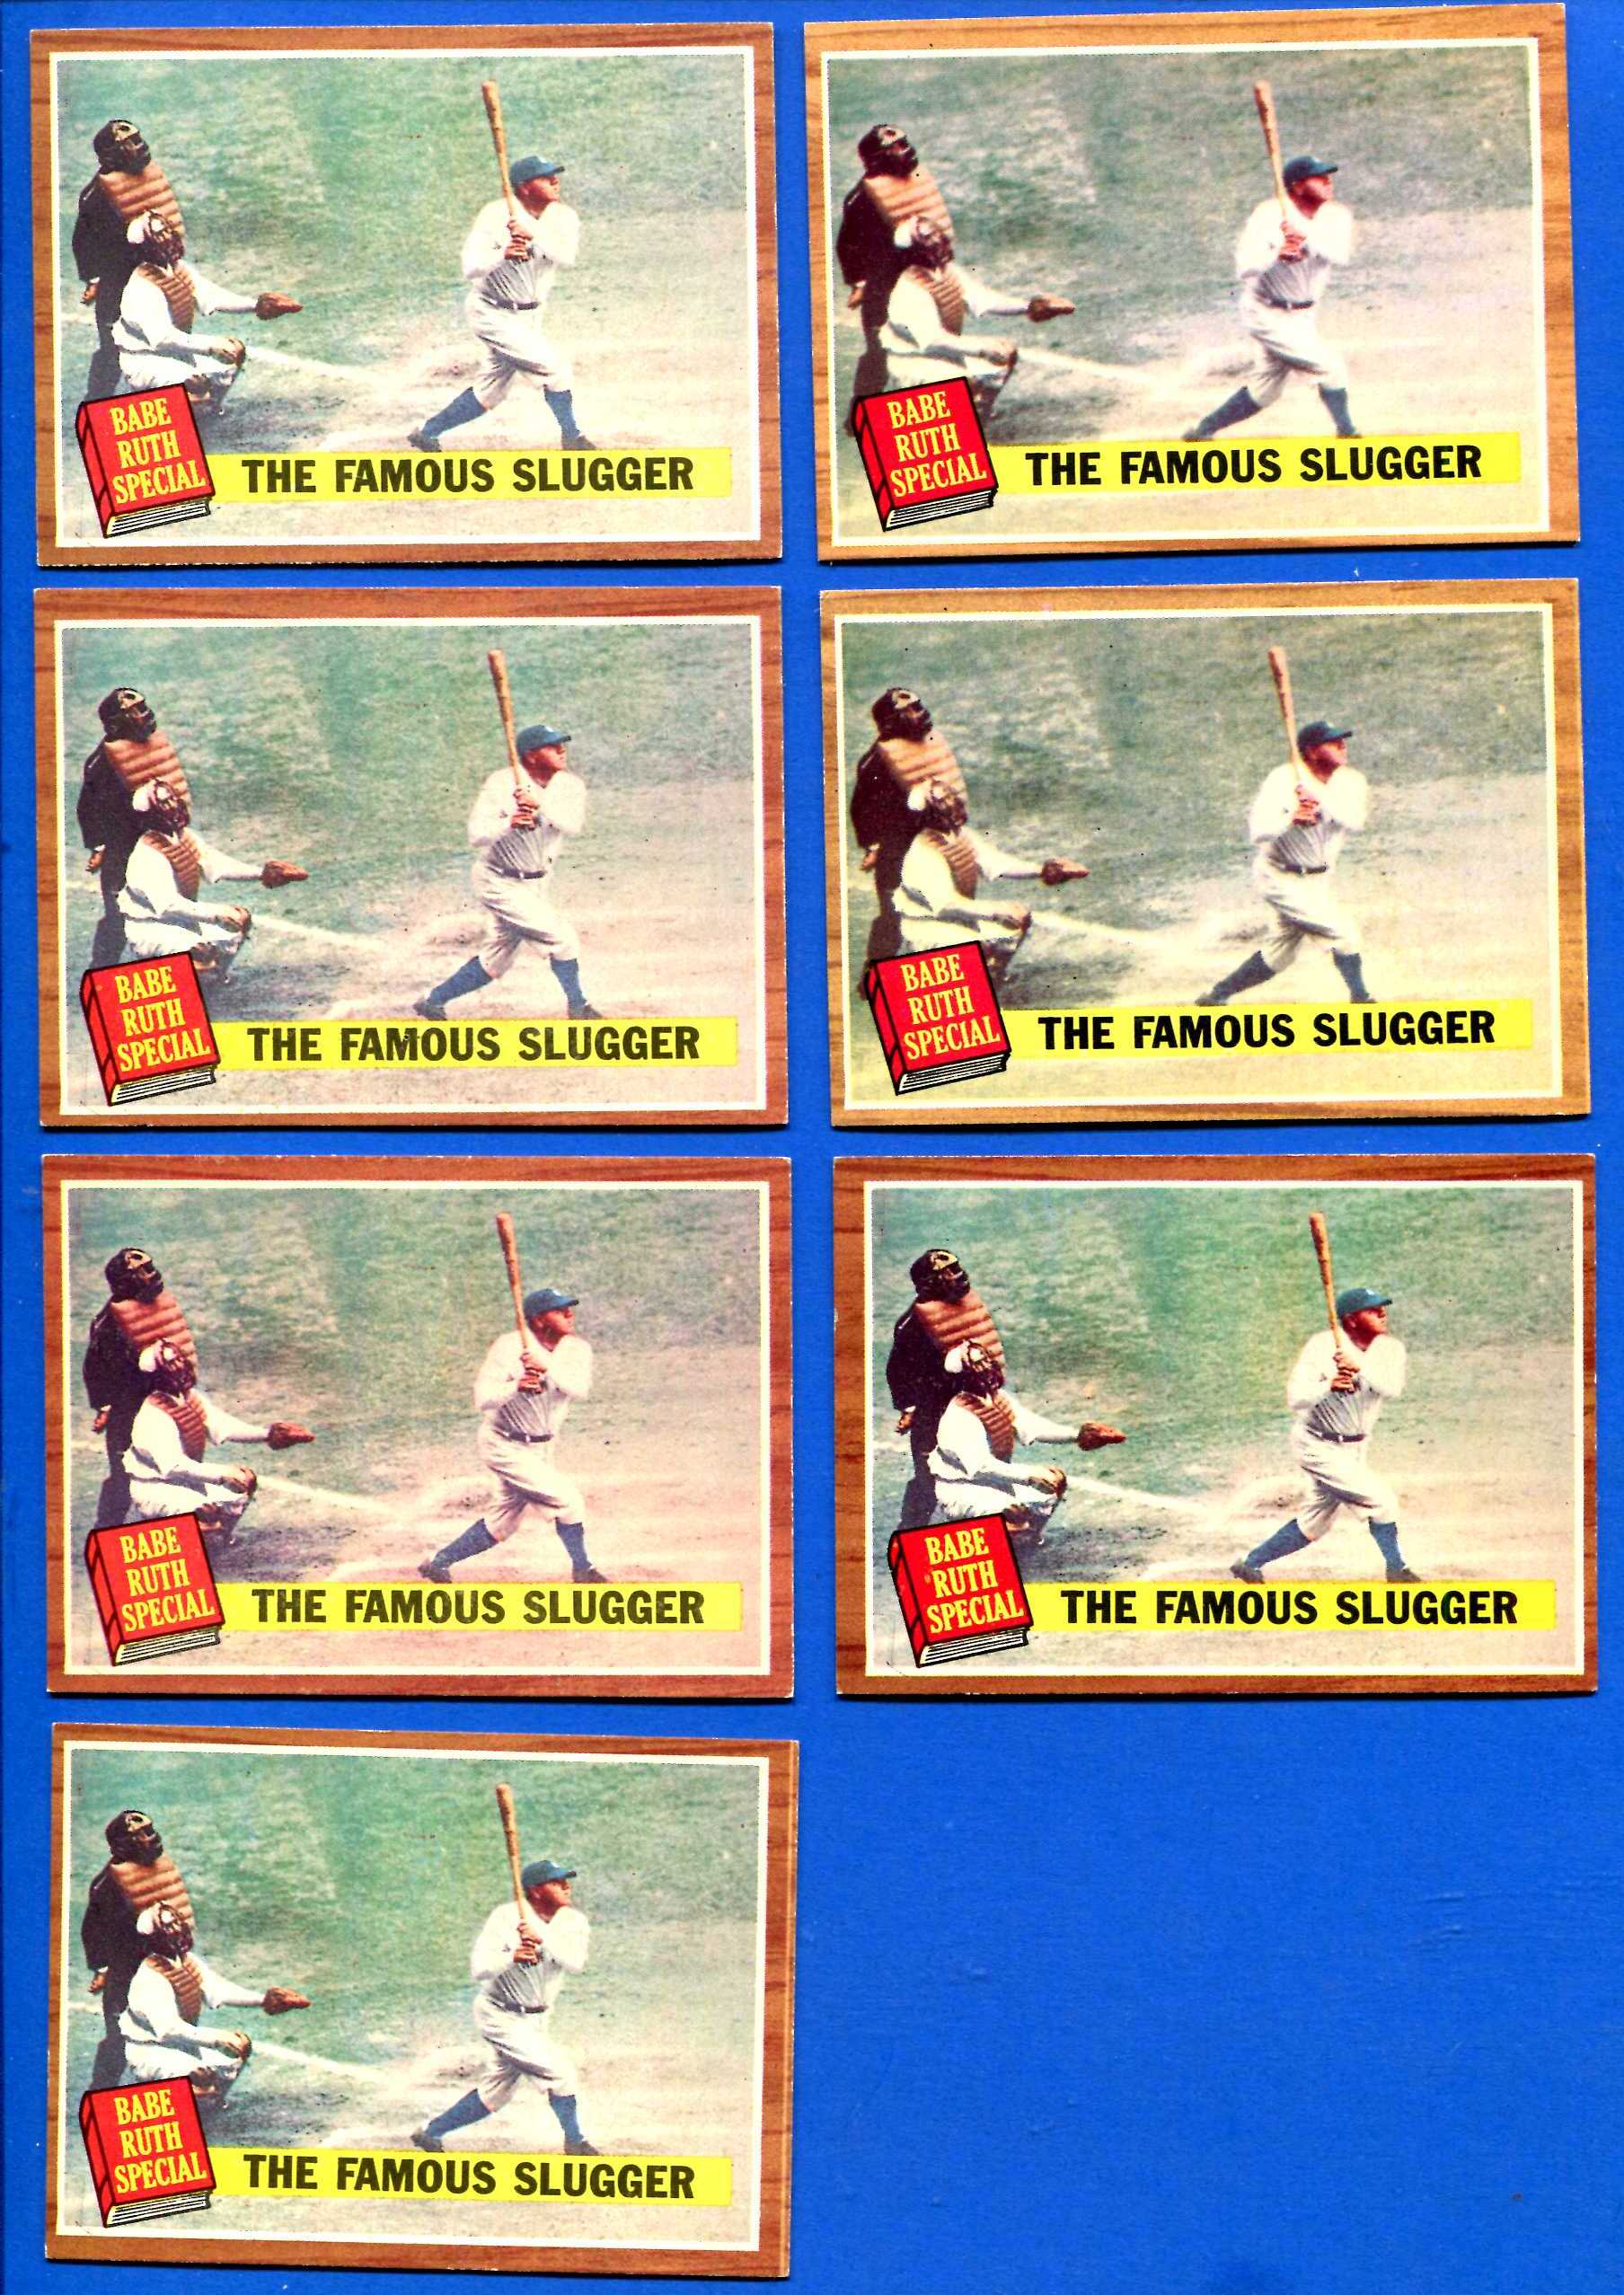 1962 Topps #138 Babe Ruth Special #4 [VAR:Green Tint] 'Famous Slugger'(Yank Baseball cards value